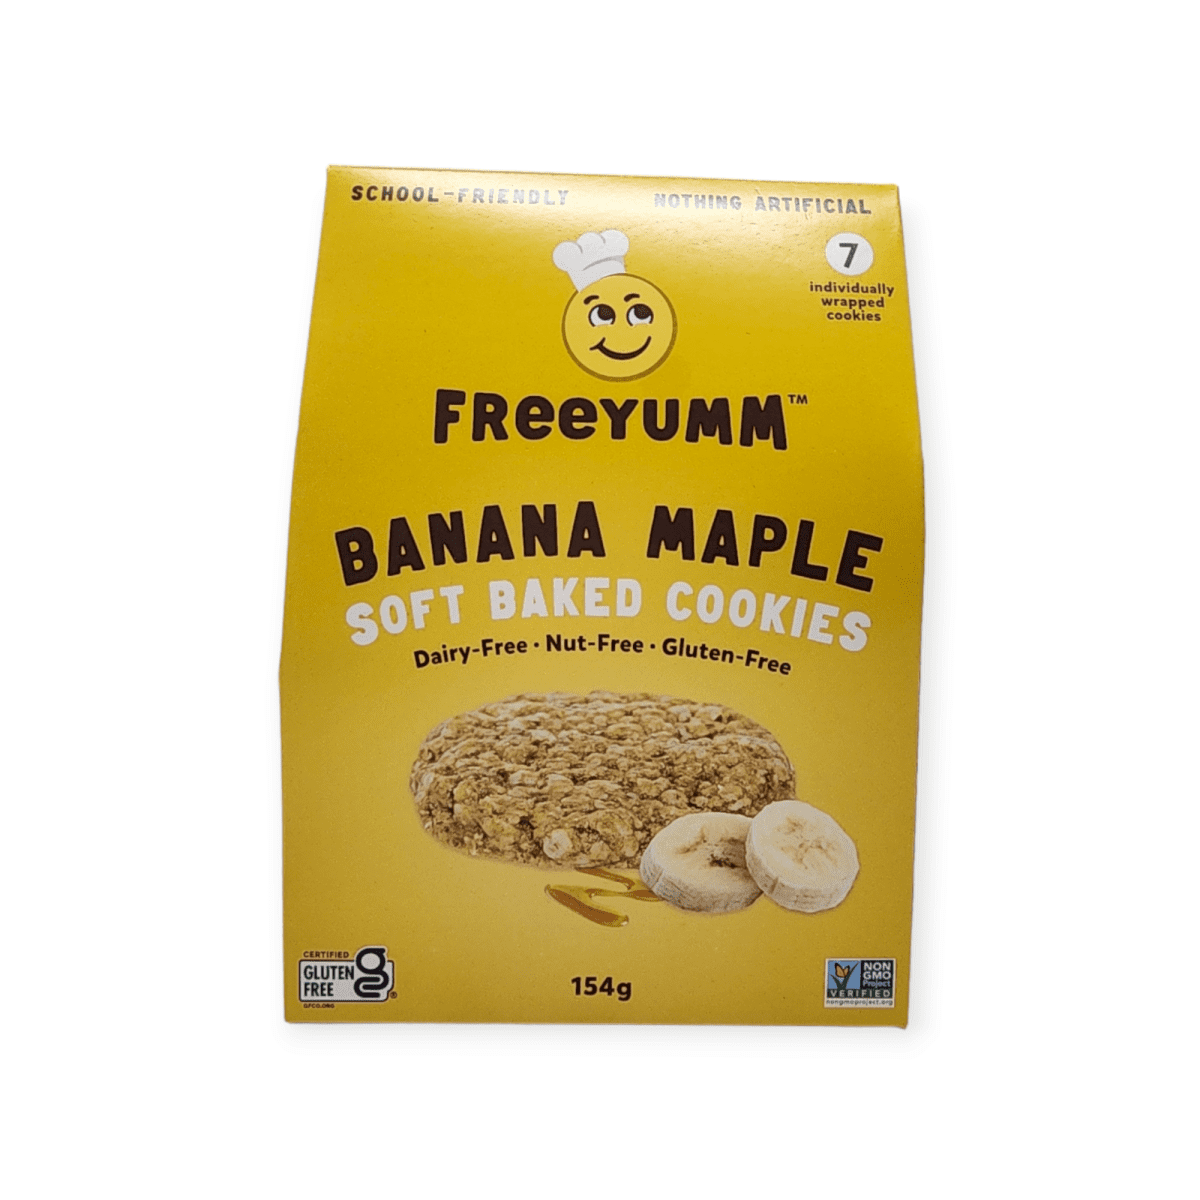 Freeyumm Banana Maple Soft Baked Cookies (154g)